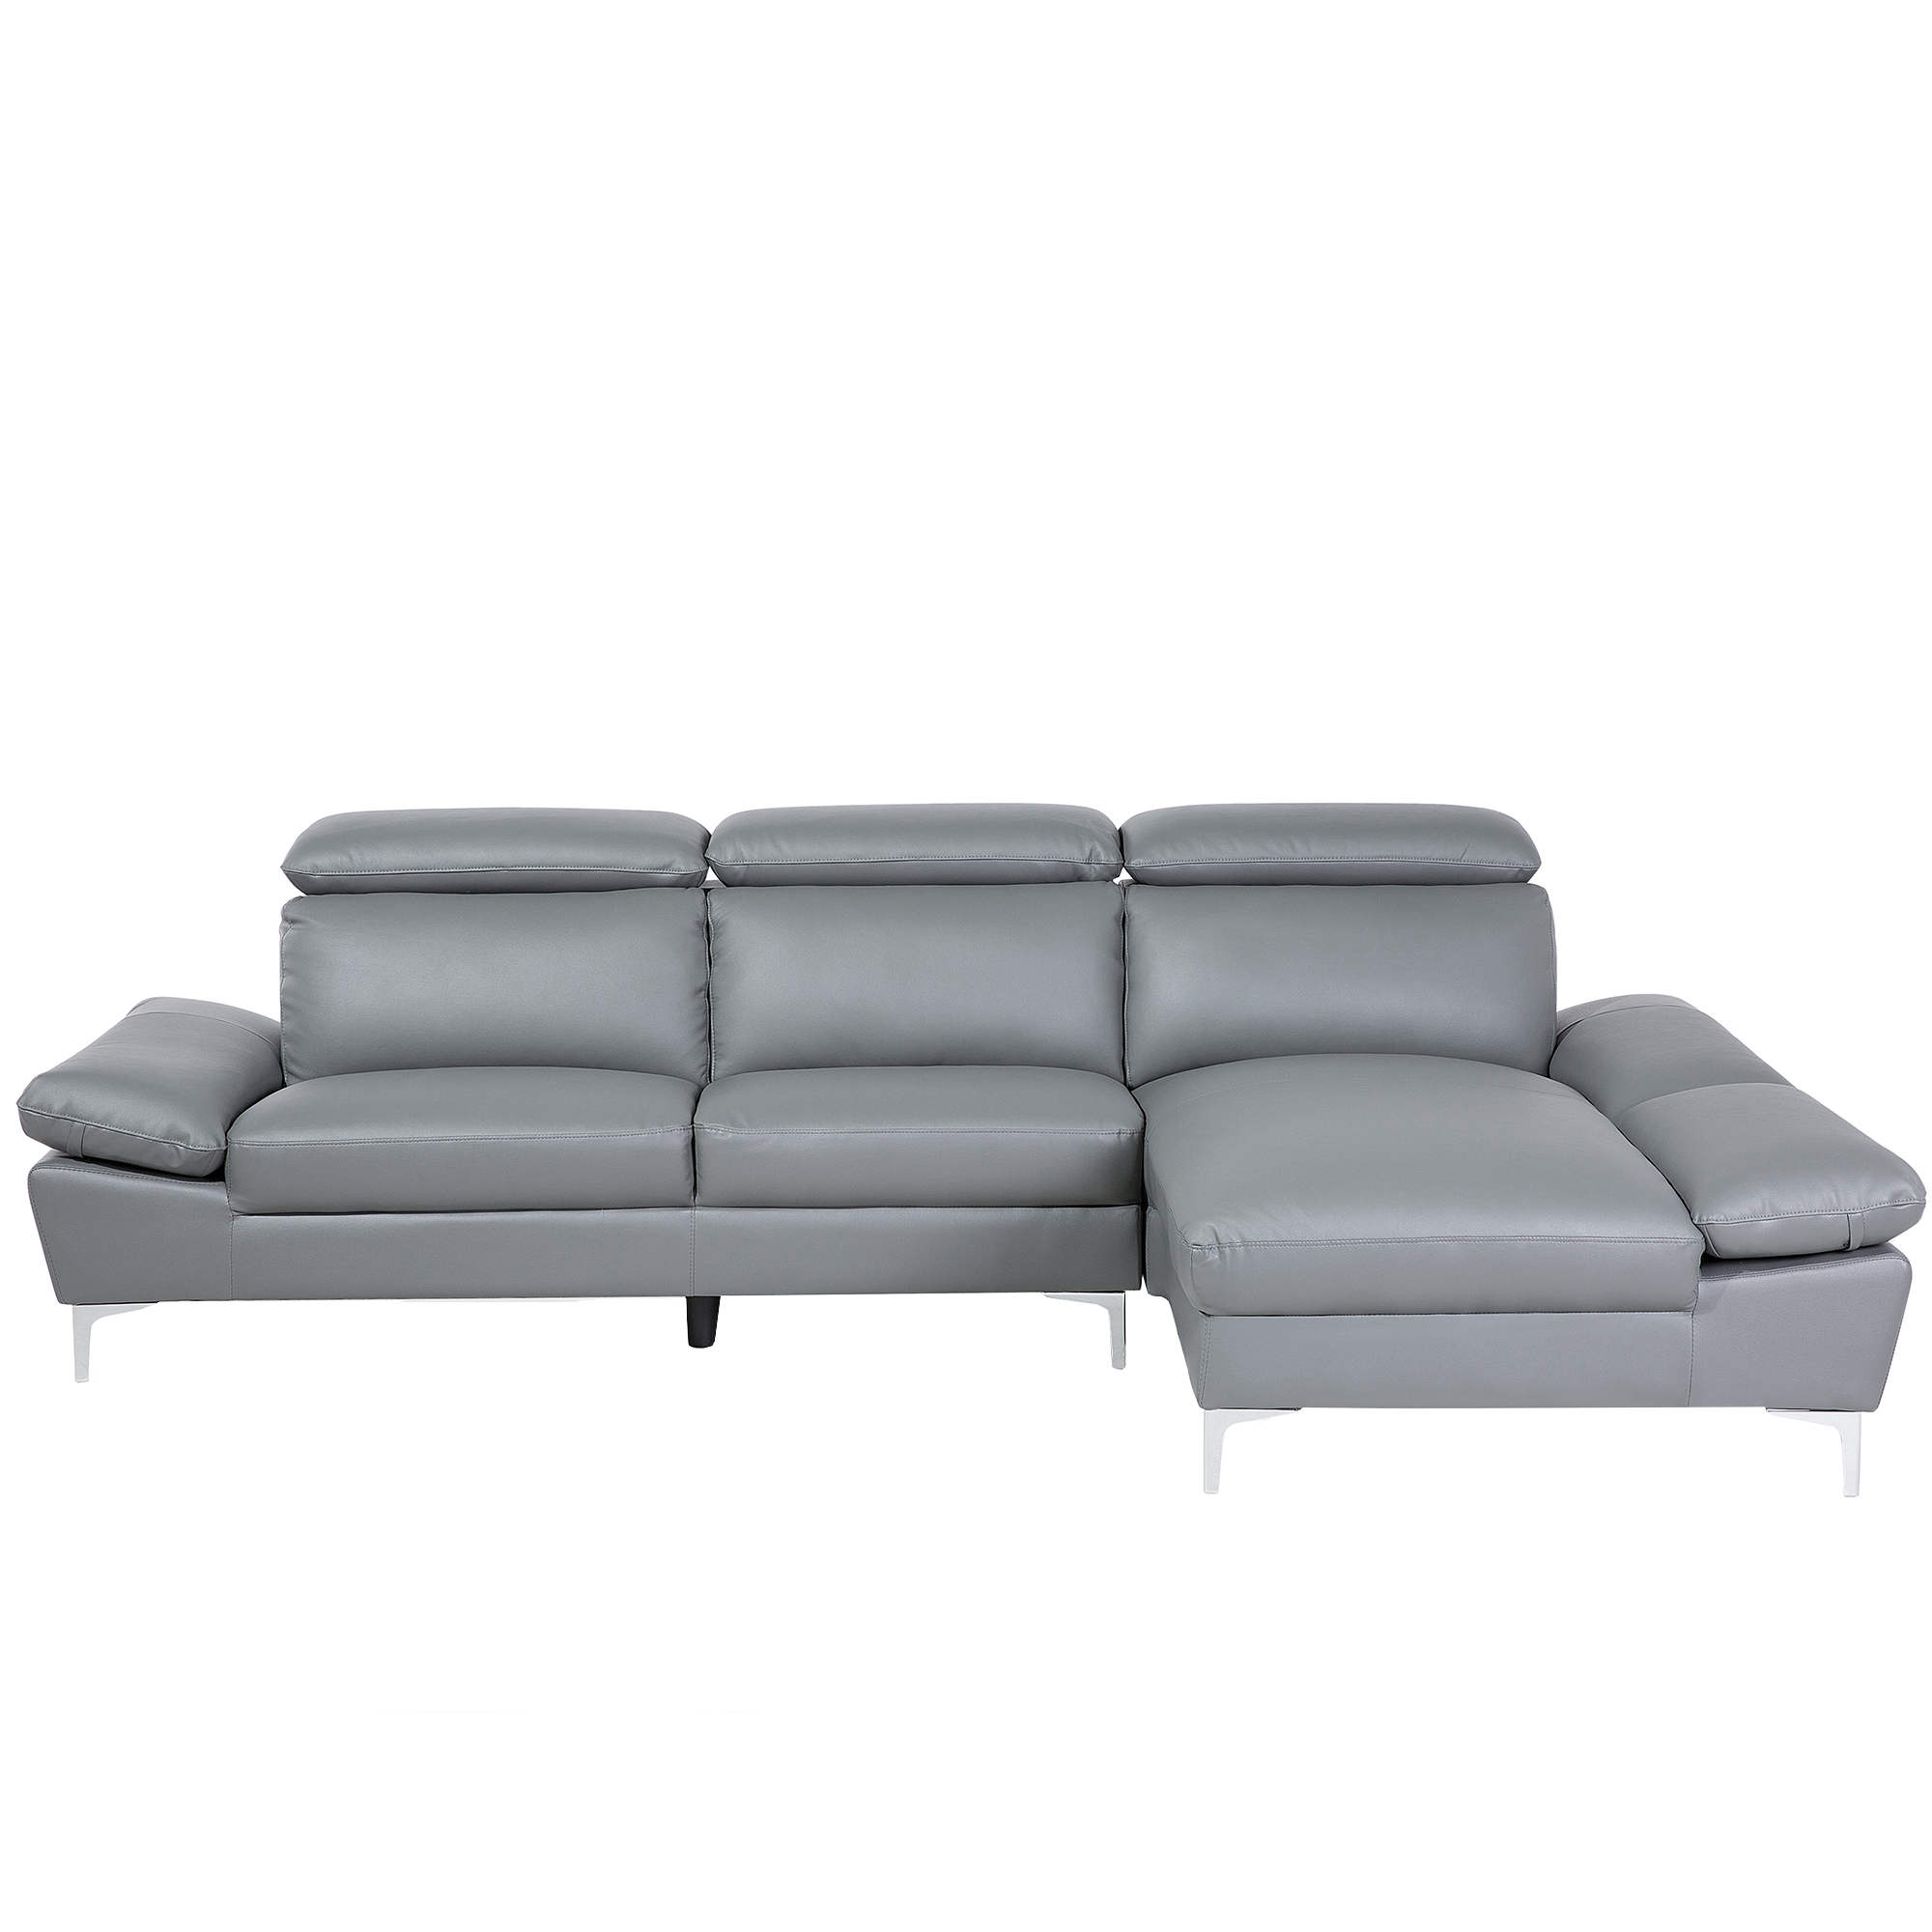 Beliani Corner Sofa Grey Leather Upholstery Left Hand Orientation with Adjustable Headrests